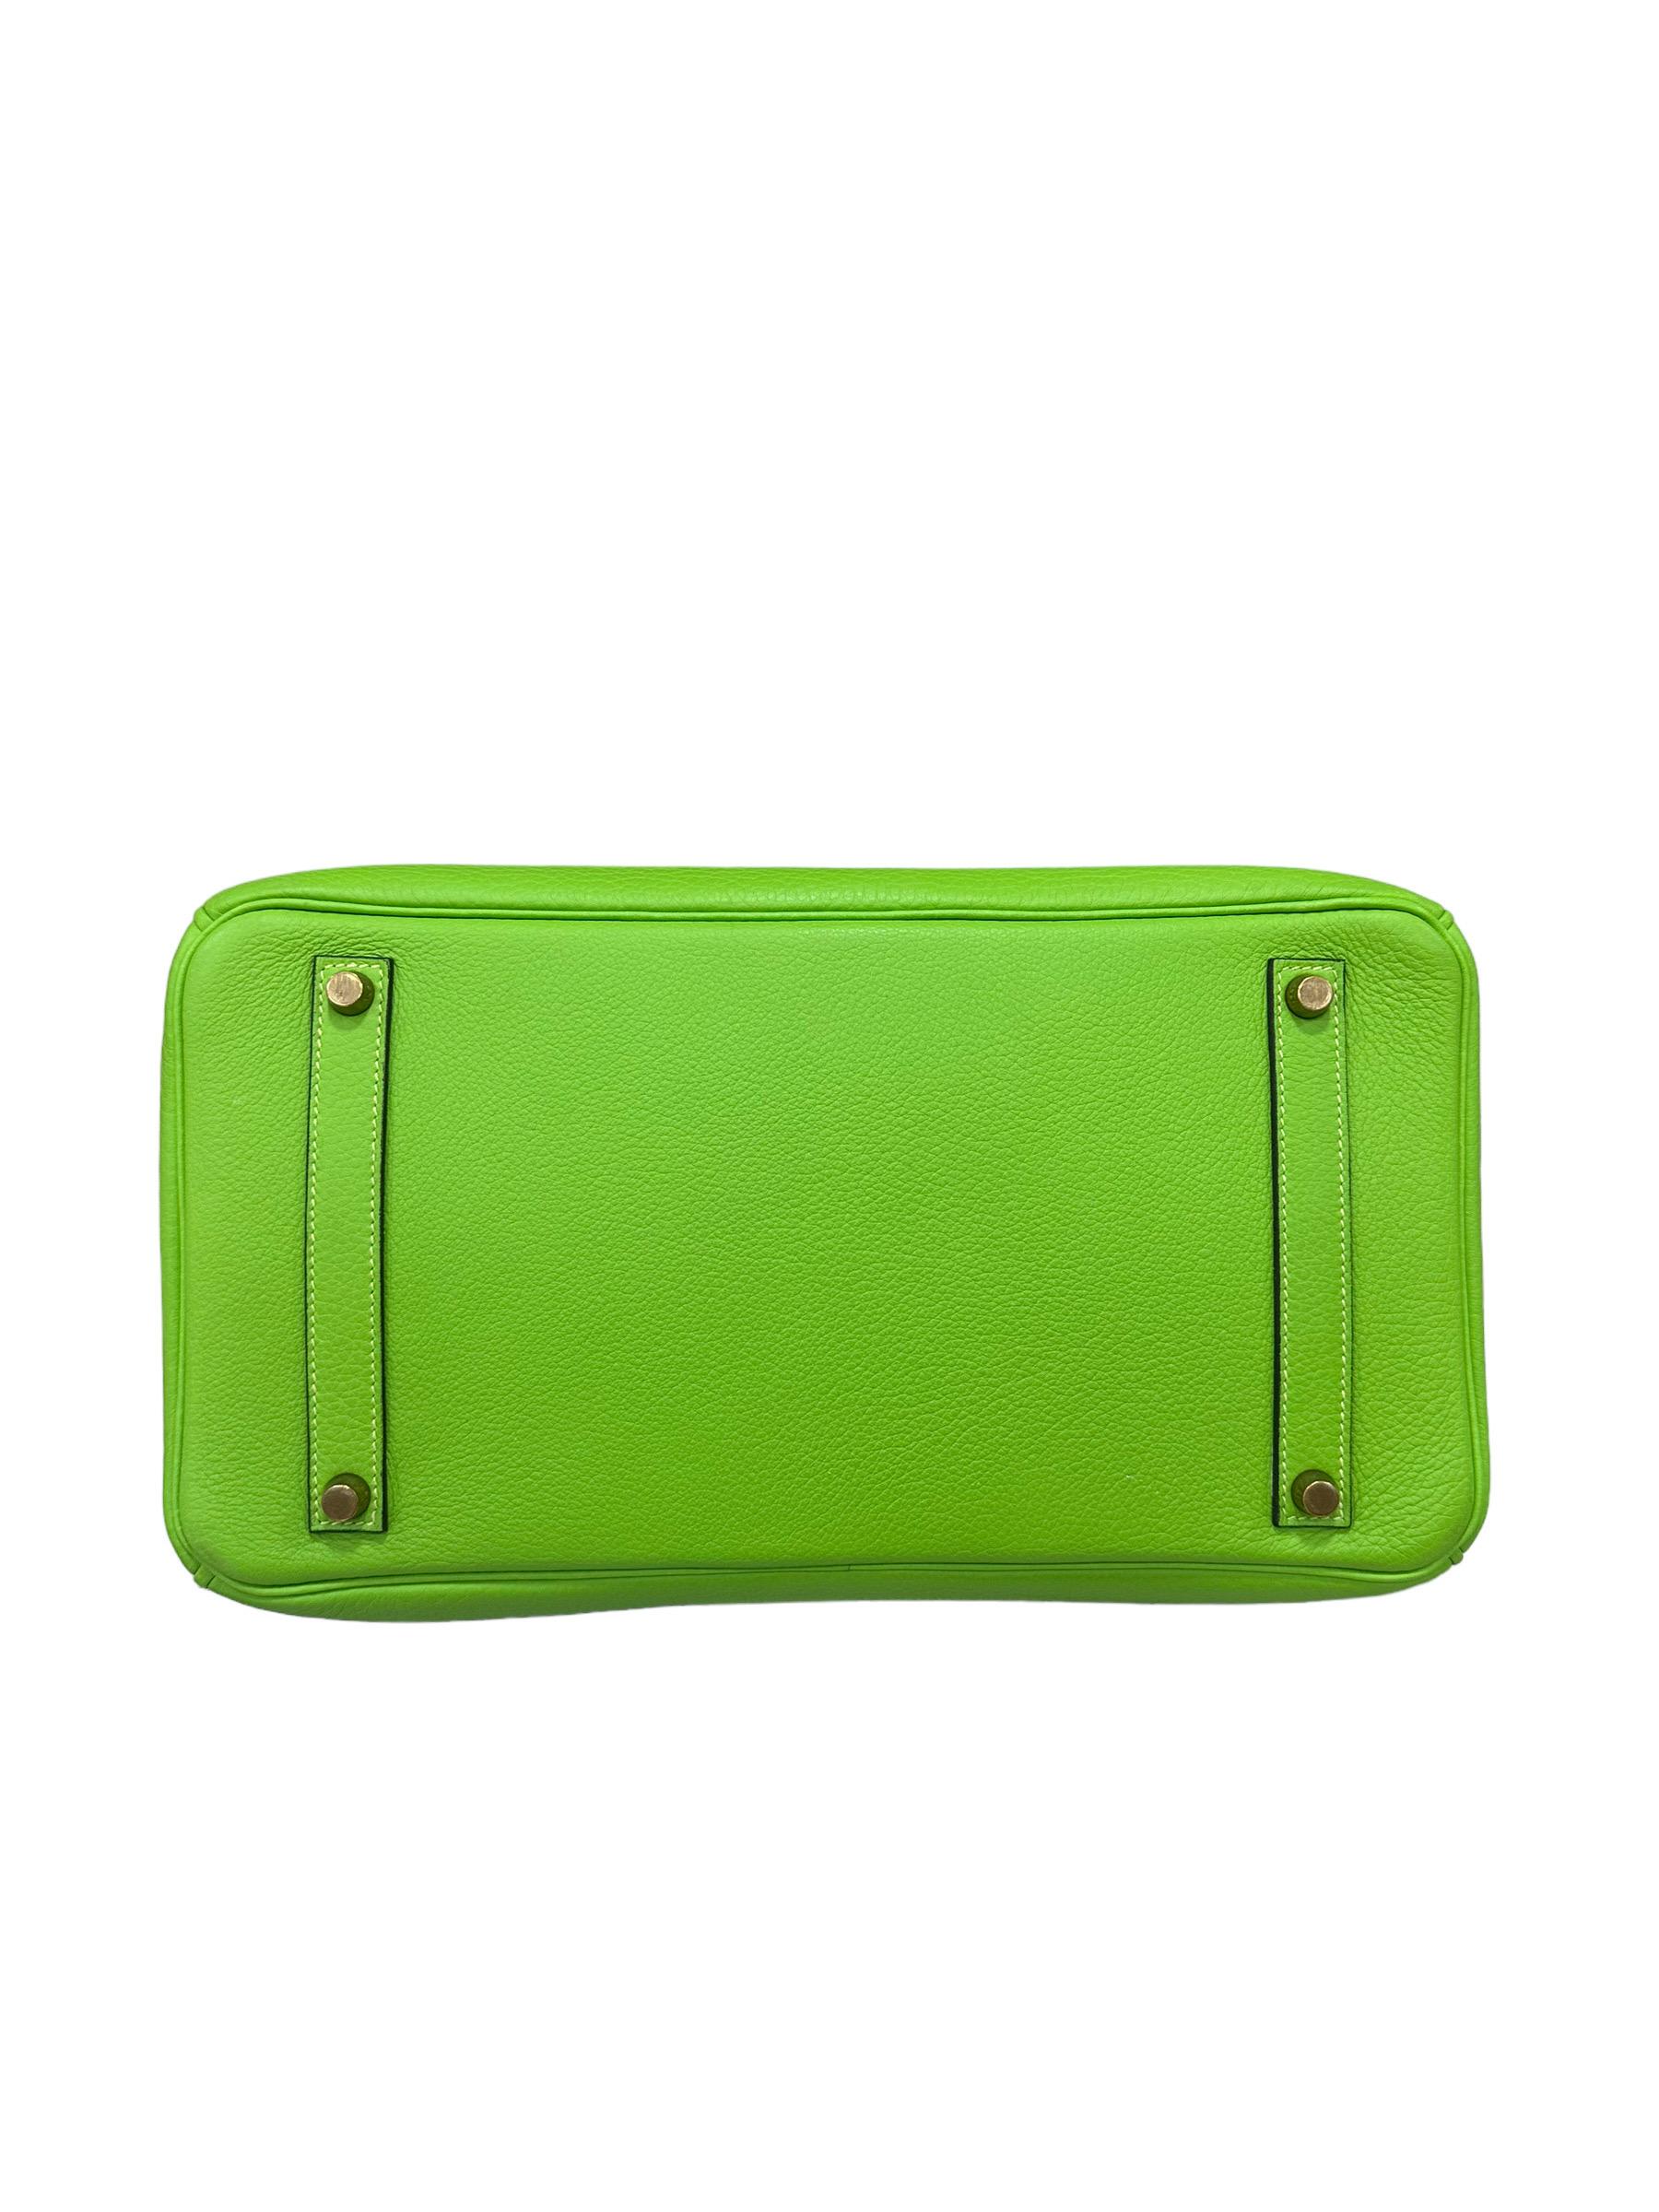 2004 Hermès Birkin 35 Clemence Leather Green Apple Top Handle Bag 5